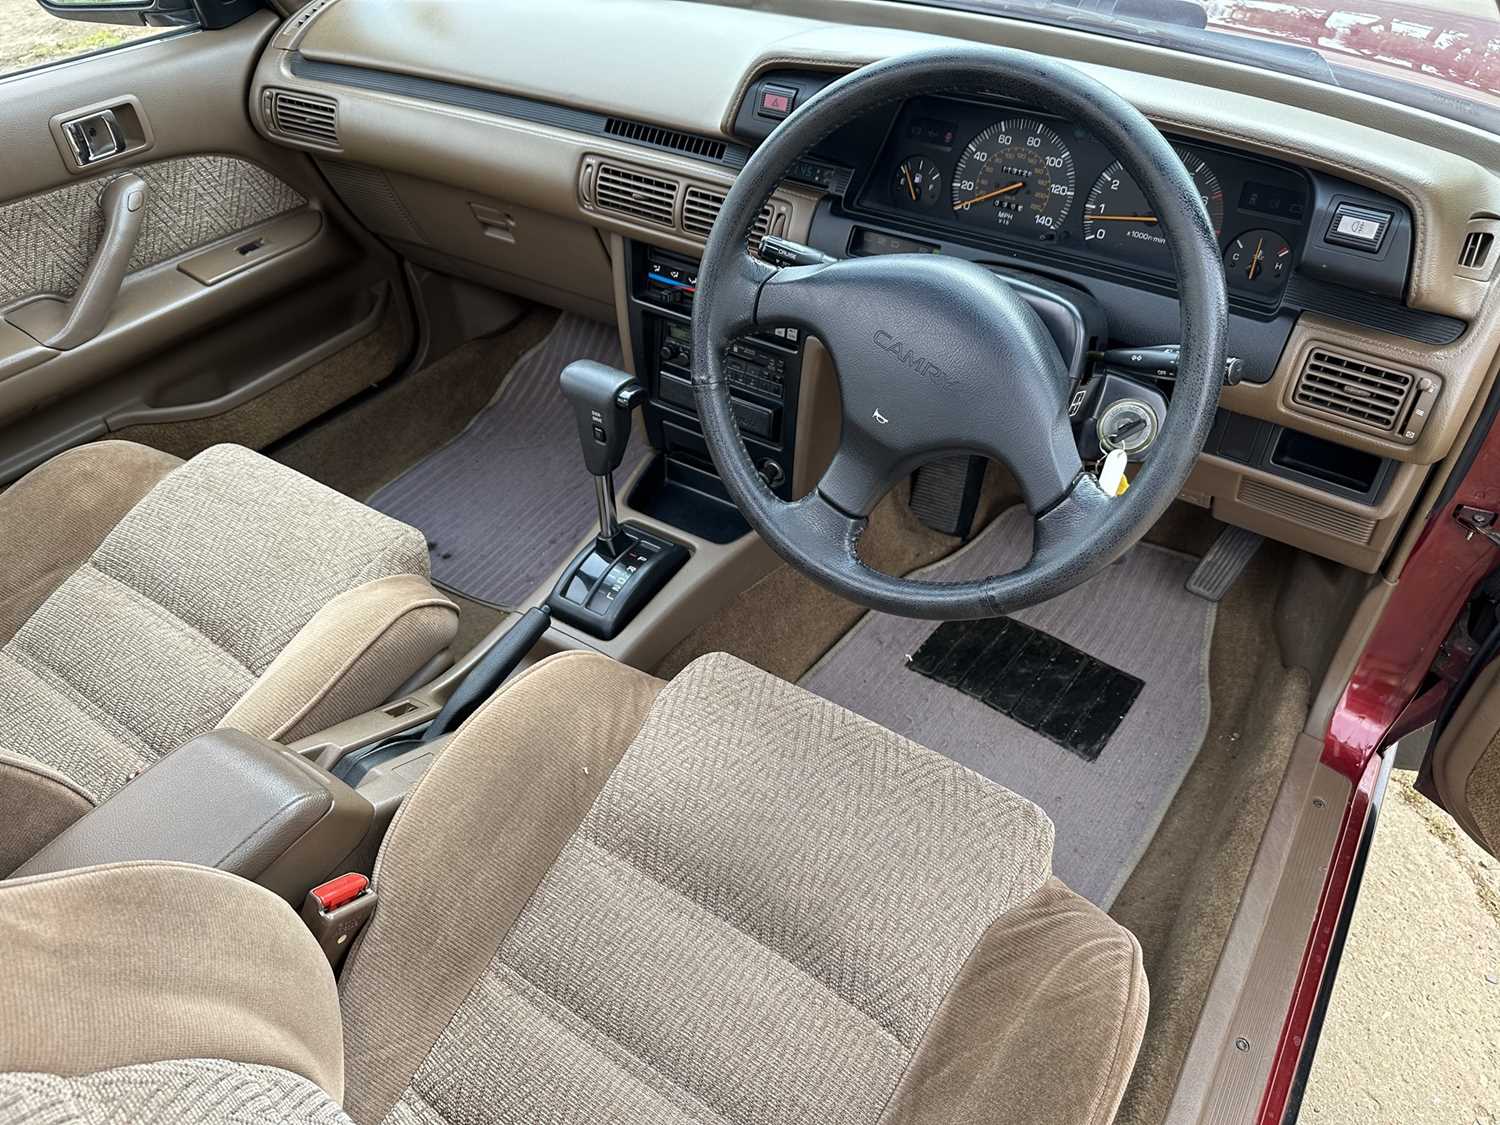 1988 Toyota Camry GLI Executive 1998cc, 4 door saloon, automatic, reg. no. F720 KVW - Bild 15 aus 26